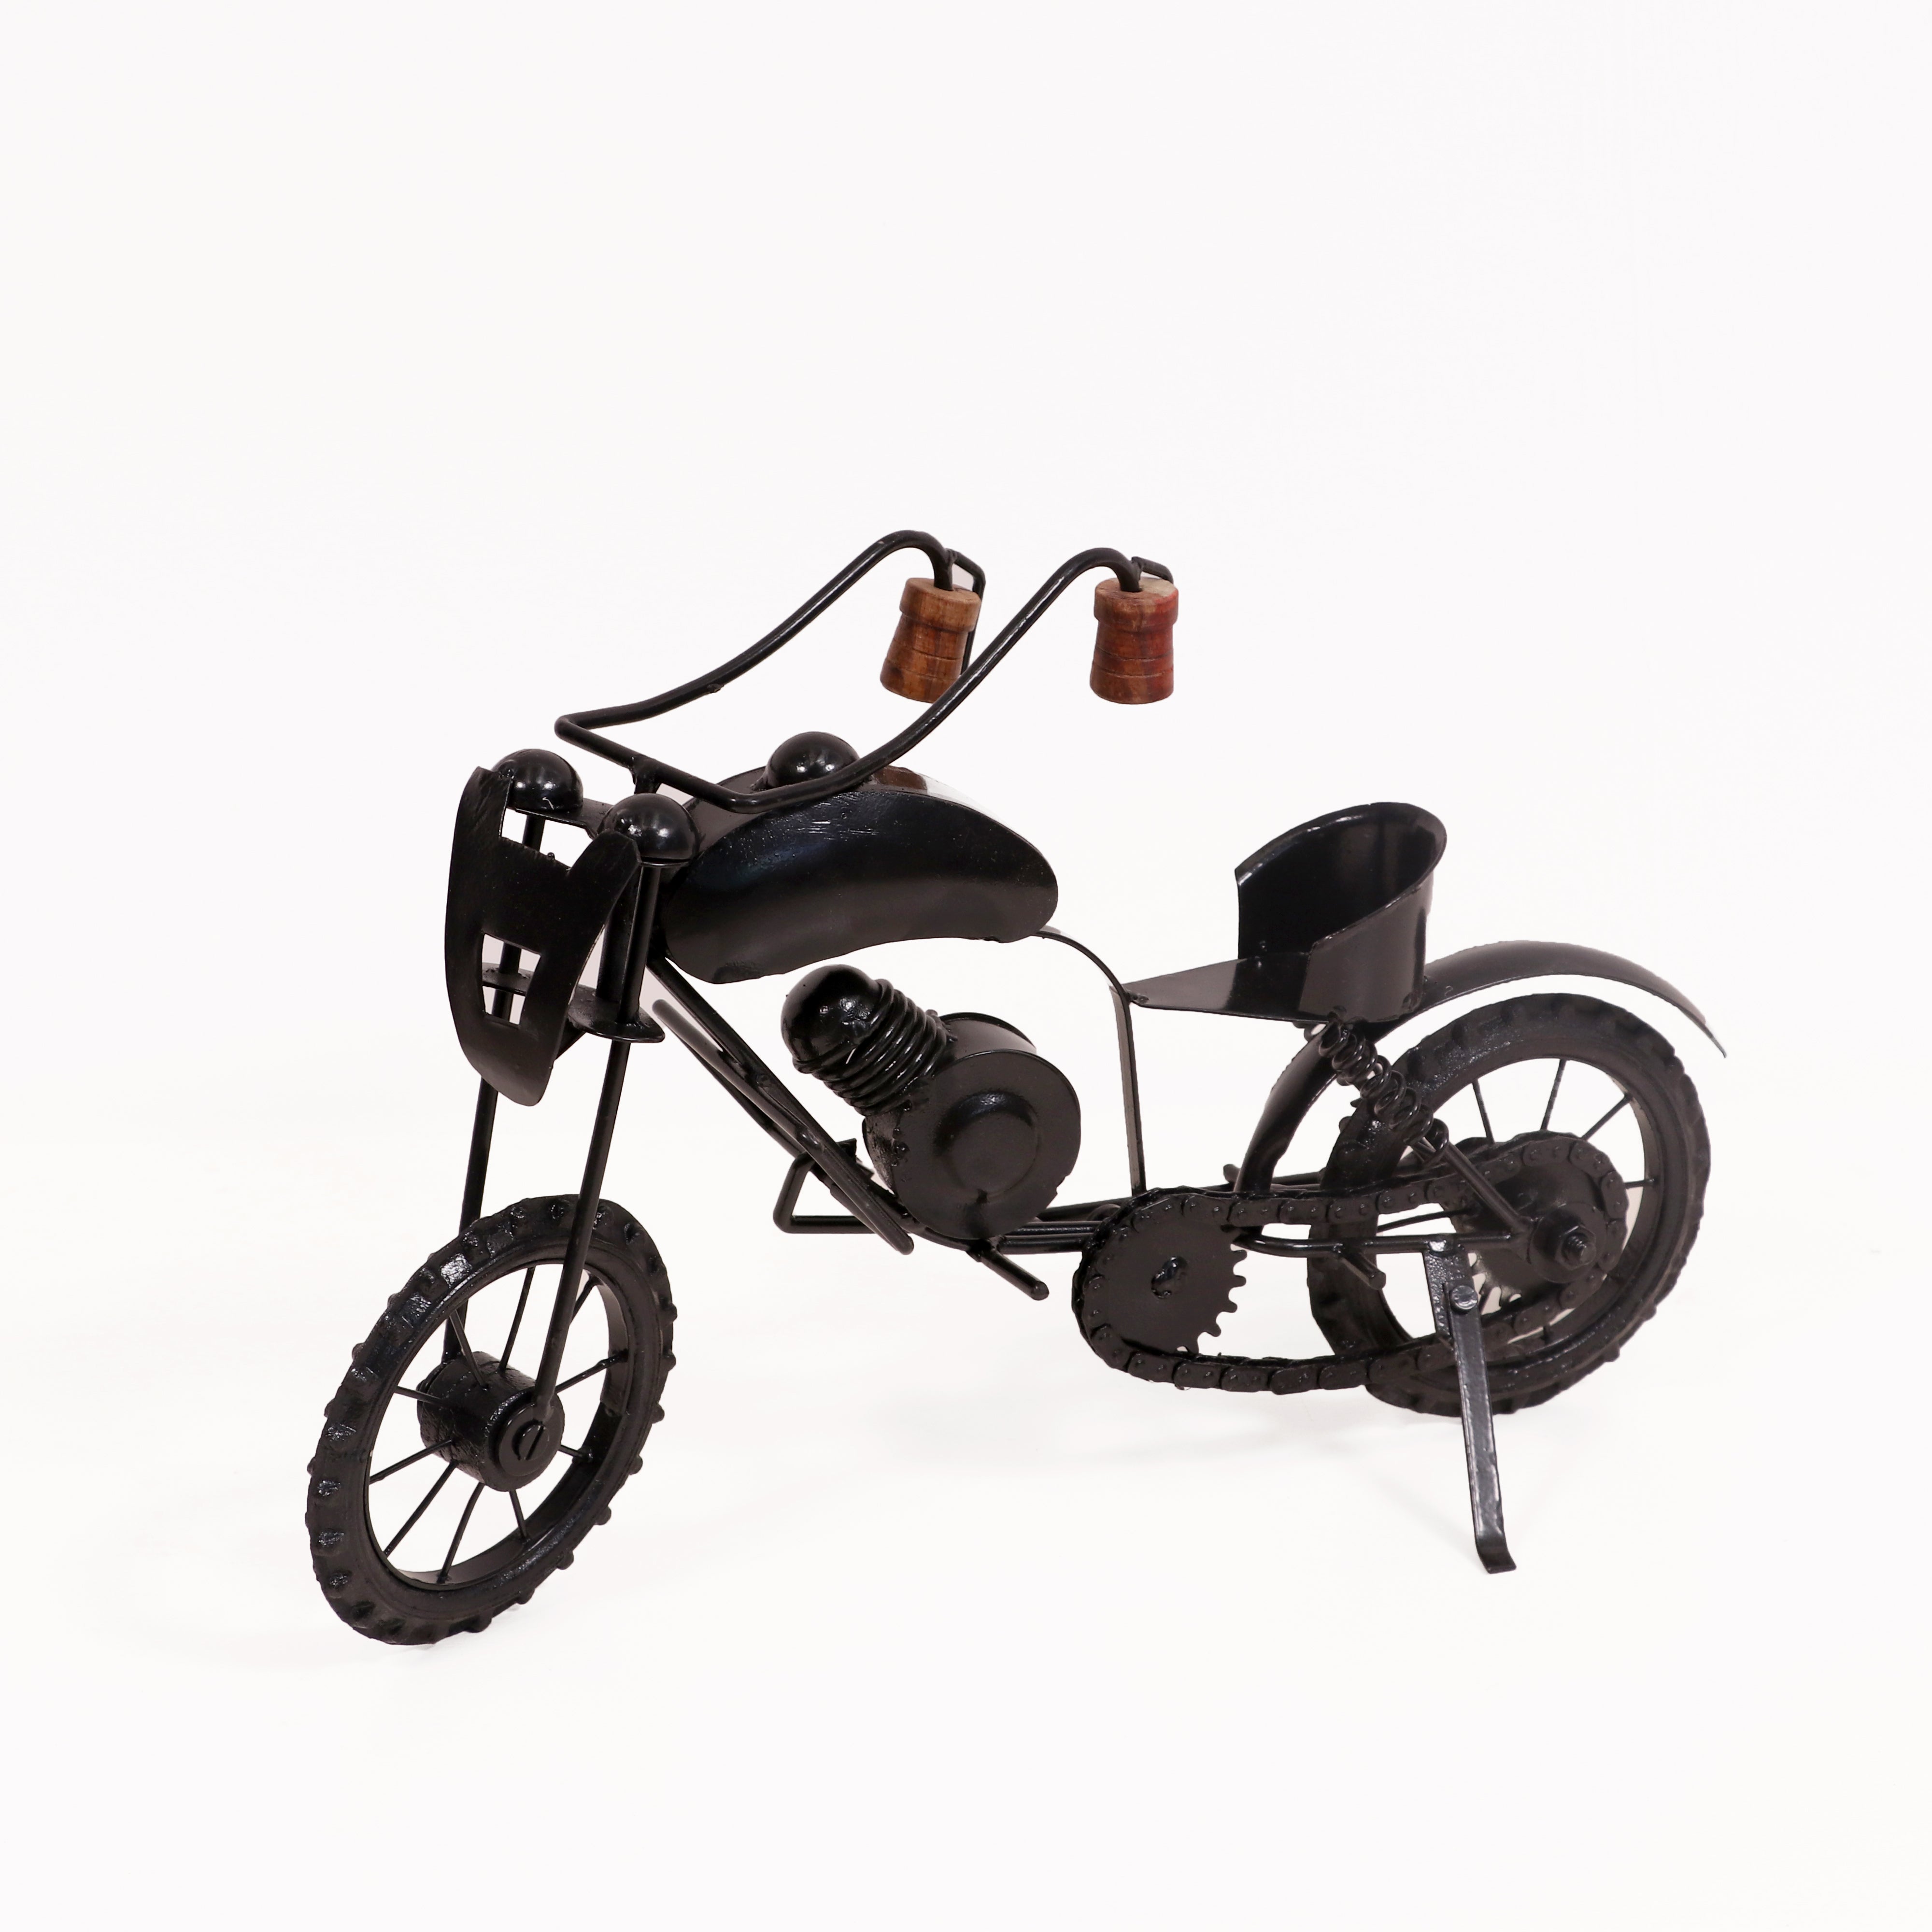 Metallic Miniature motorcycle inspired vehicle Vehicle figurine